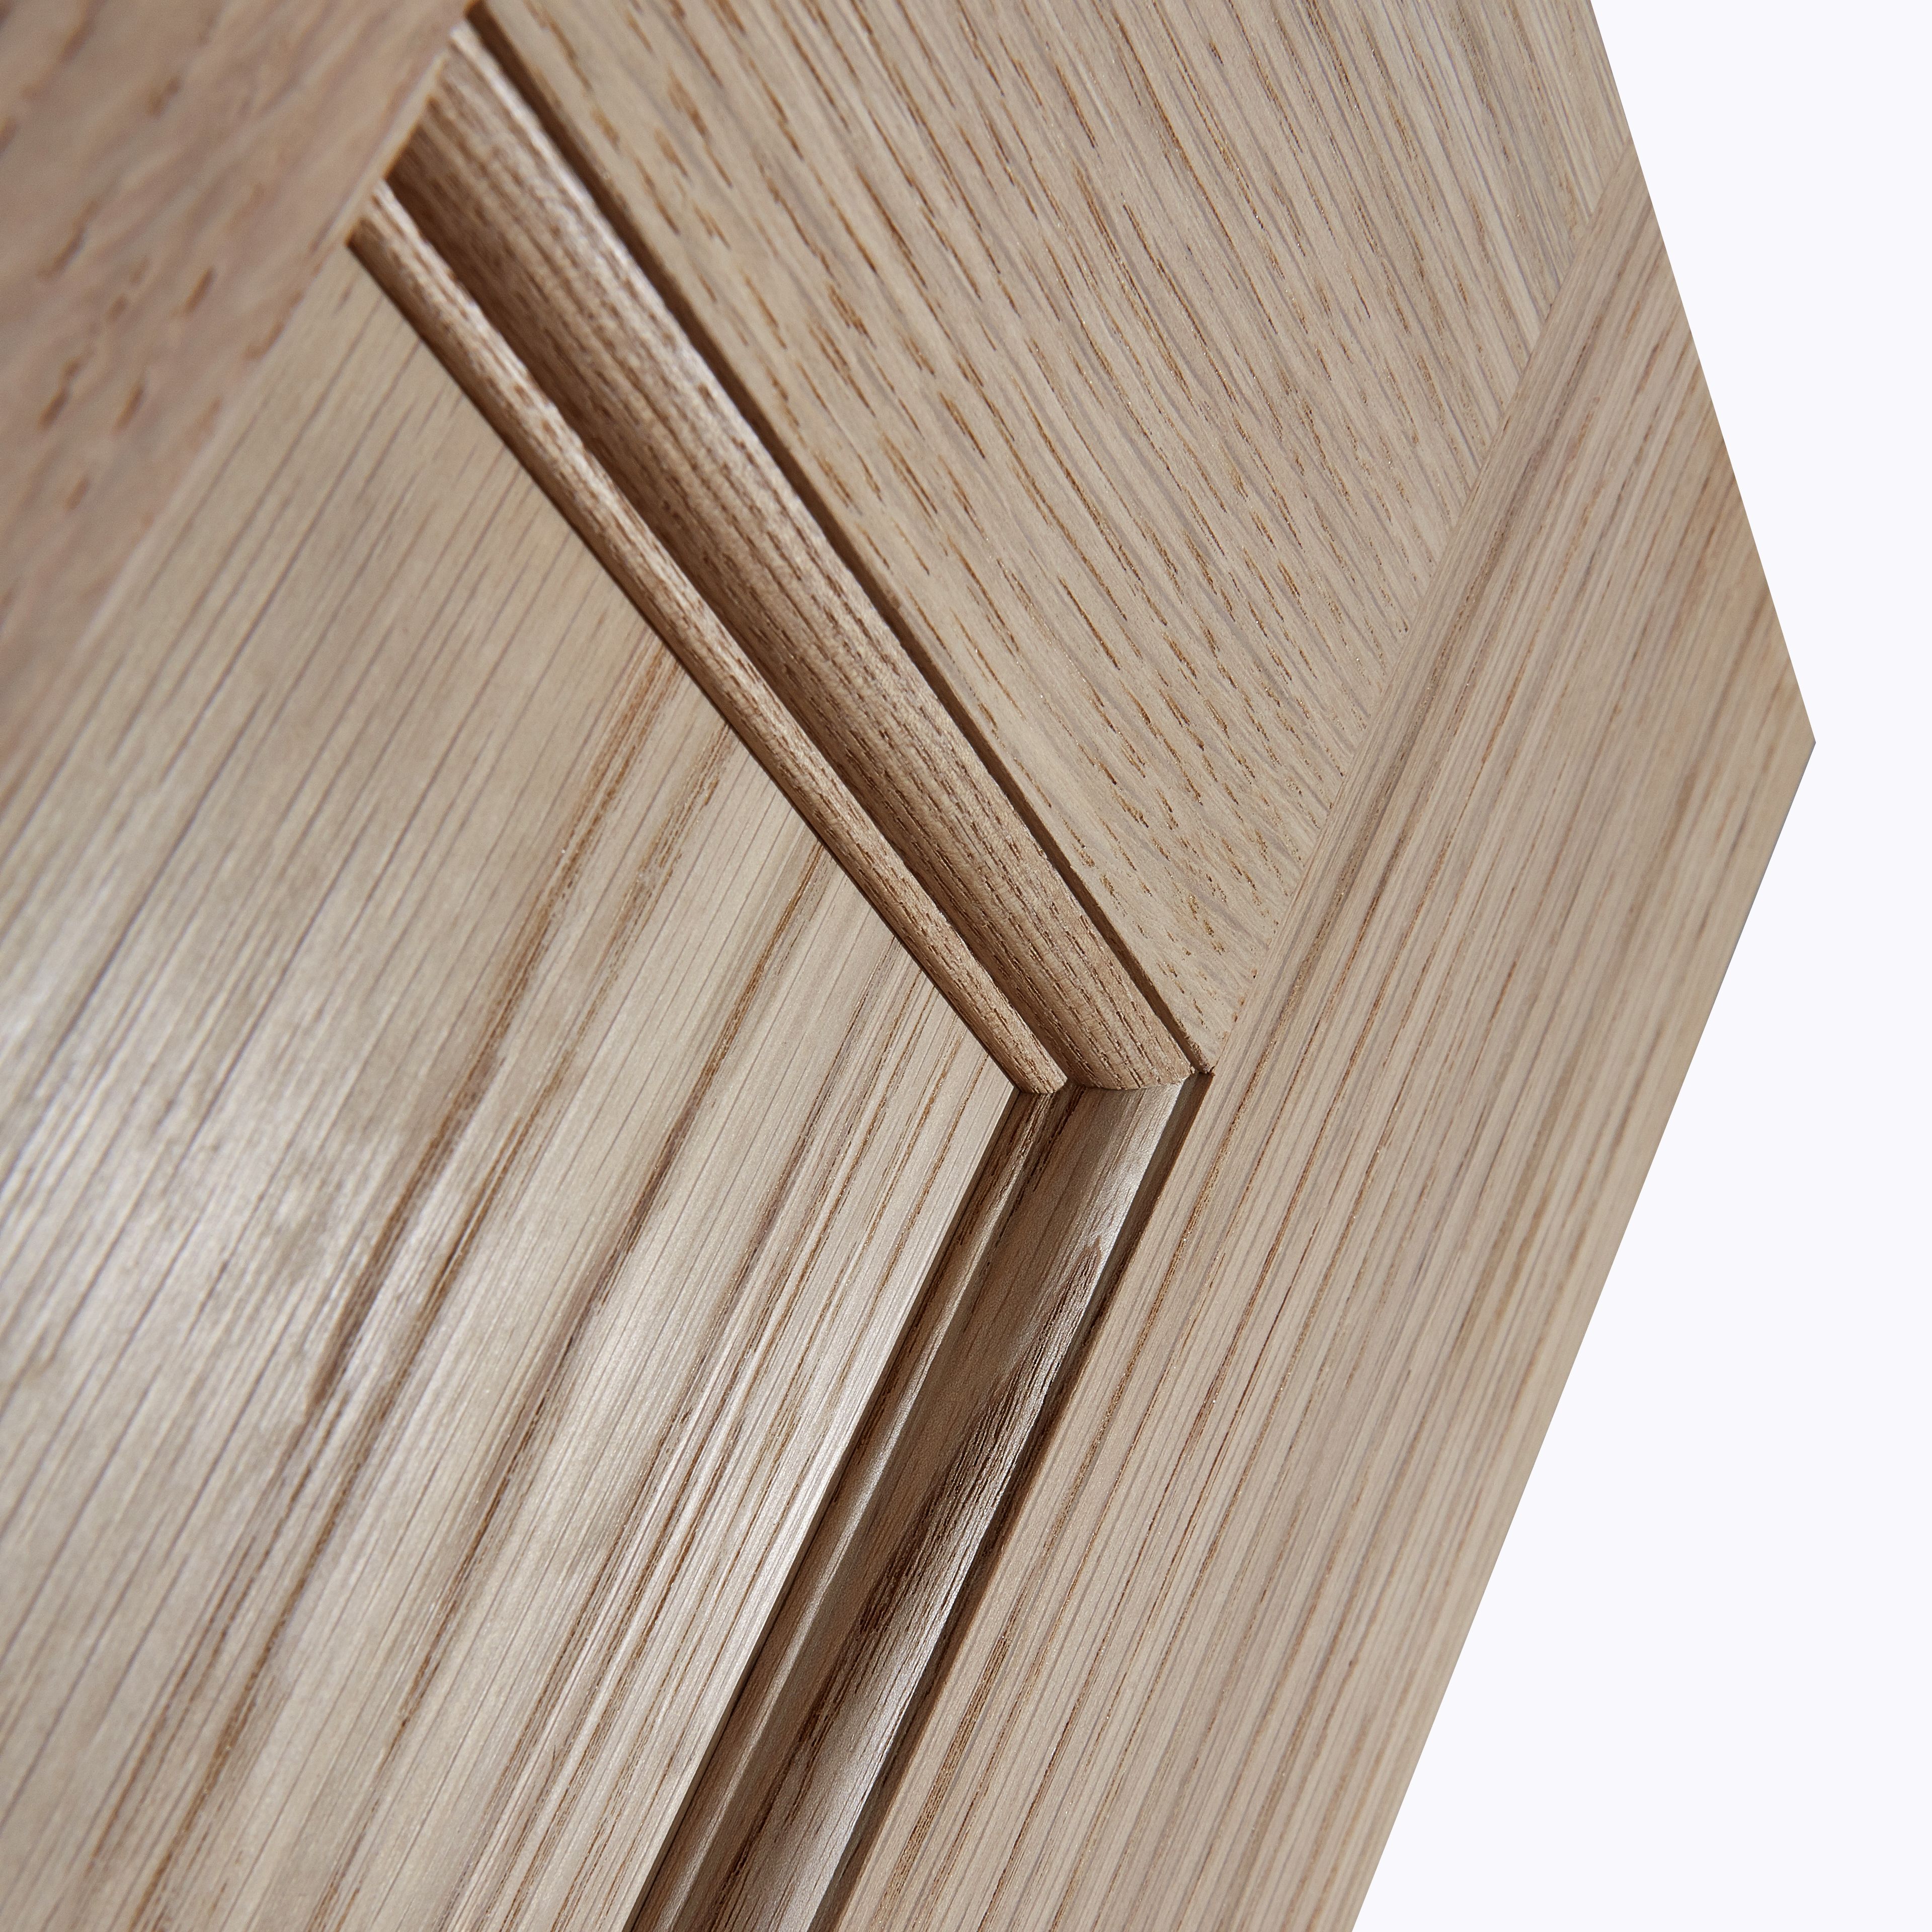 Vertical 3 panel Unglazed Contemporary White oak veneer Internal Door, (H)1981mm (W)838mm (T)35mm